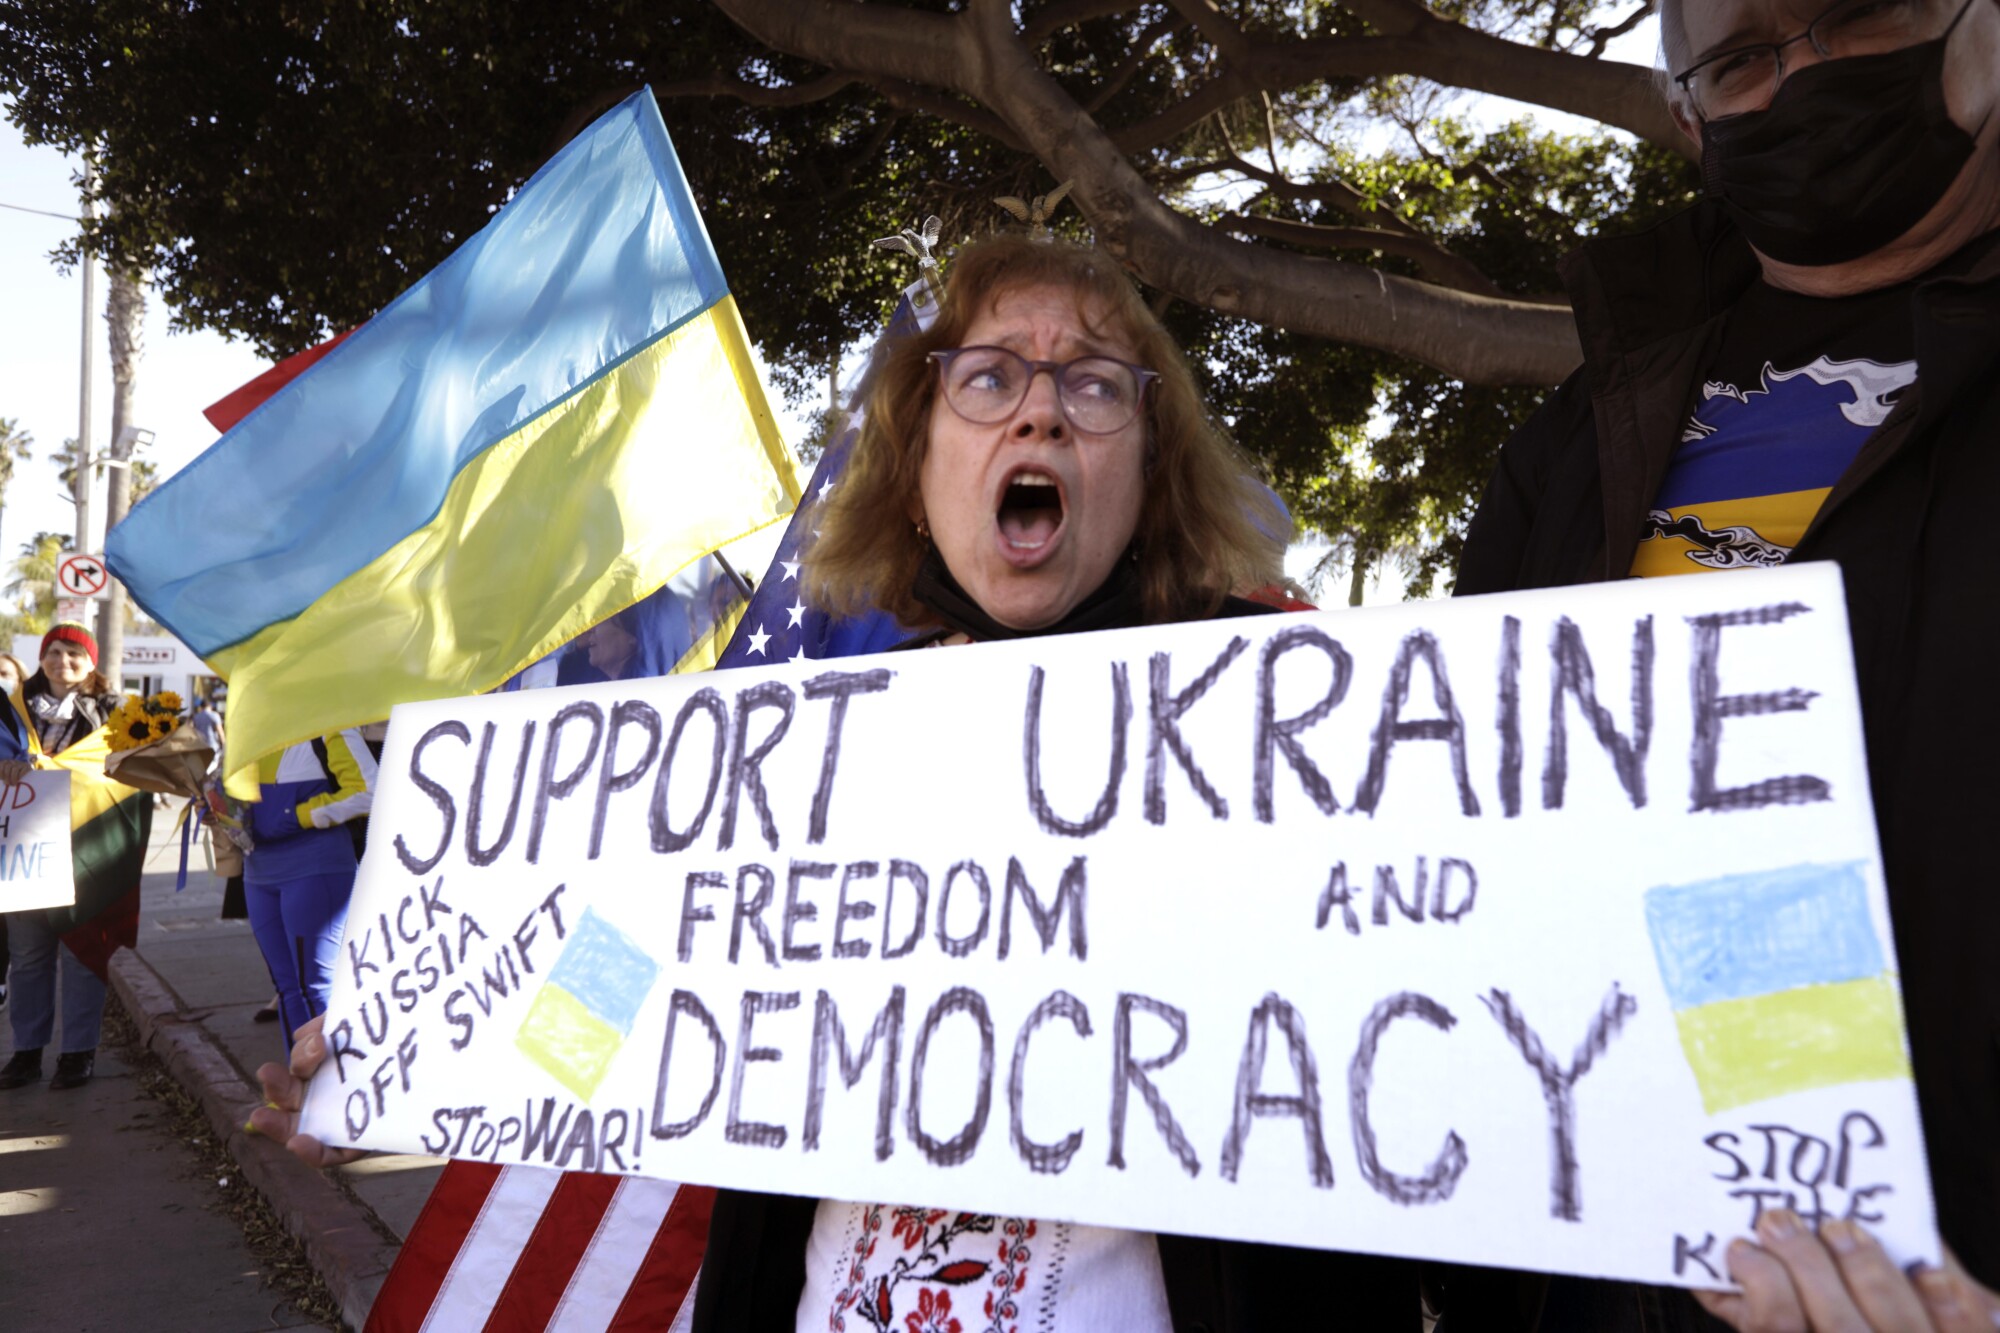 A protester at a rally denounces Russia's invasion of Ukraine near the Santa Monica Pier along Ocean Avenue in Santa Monica